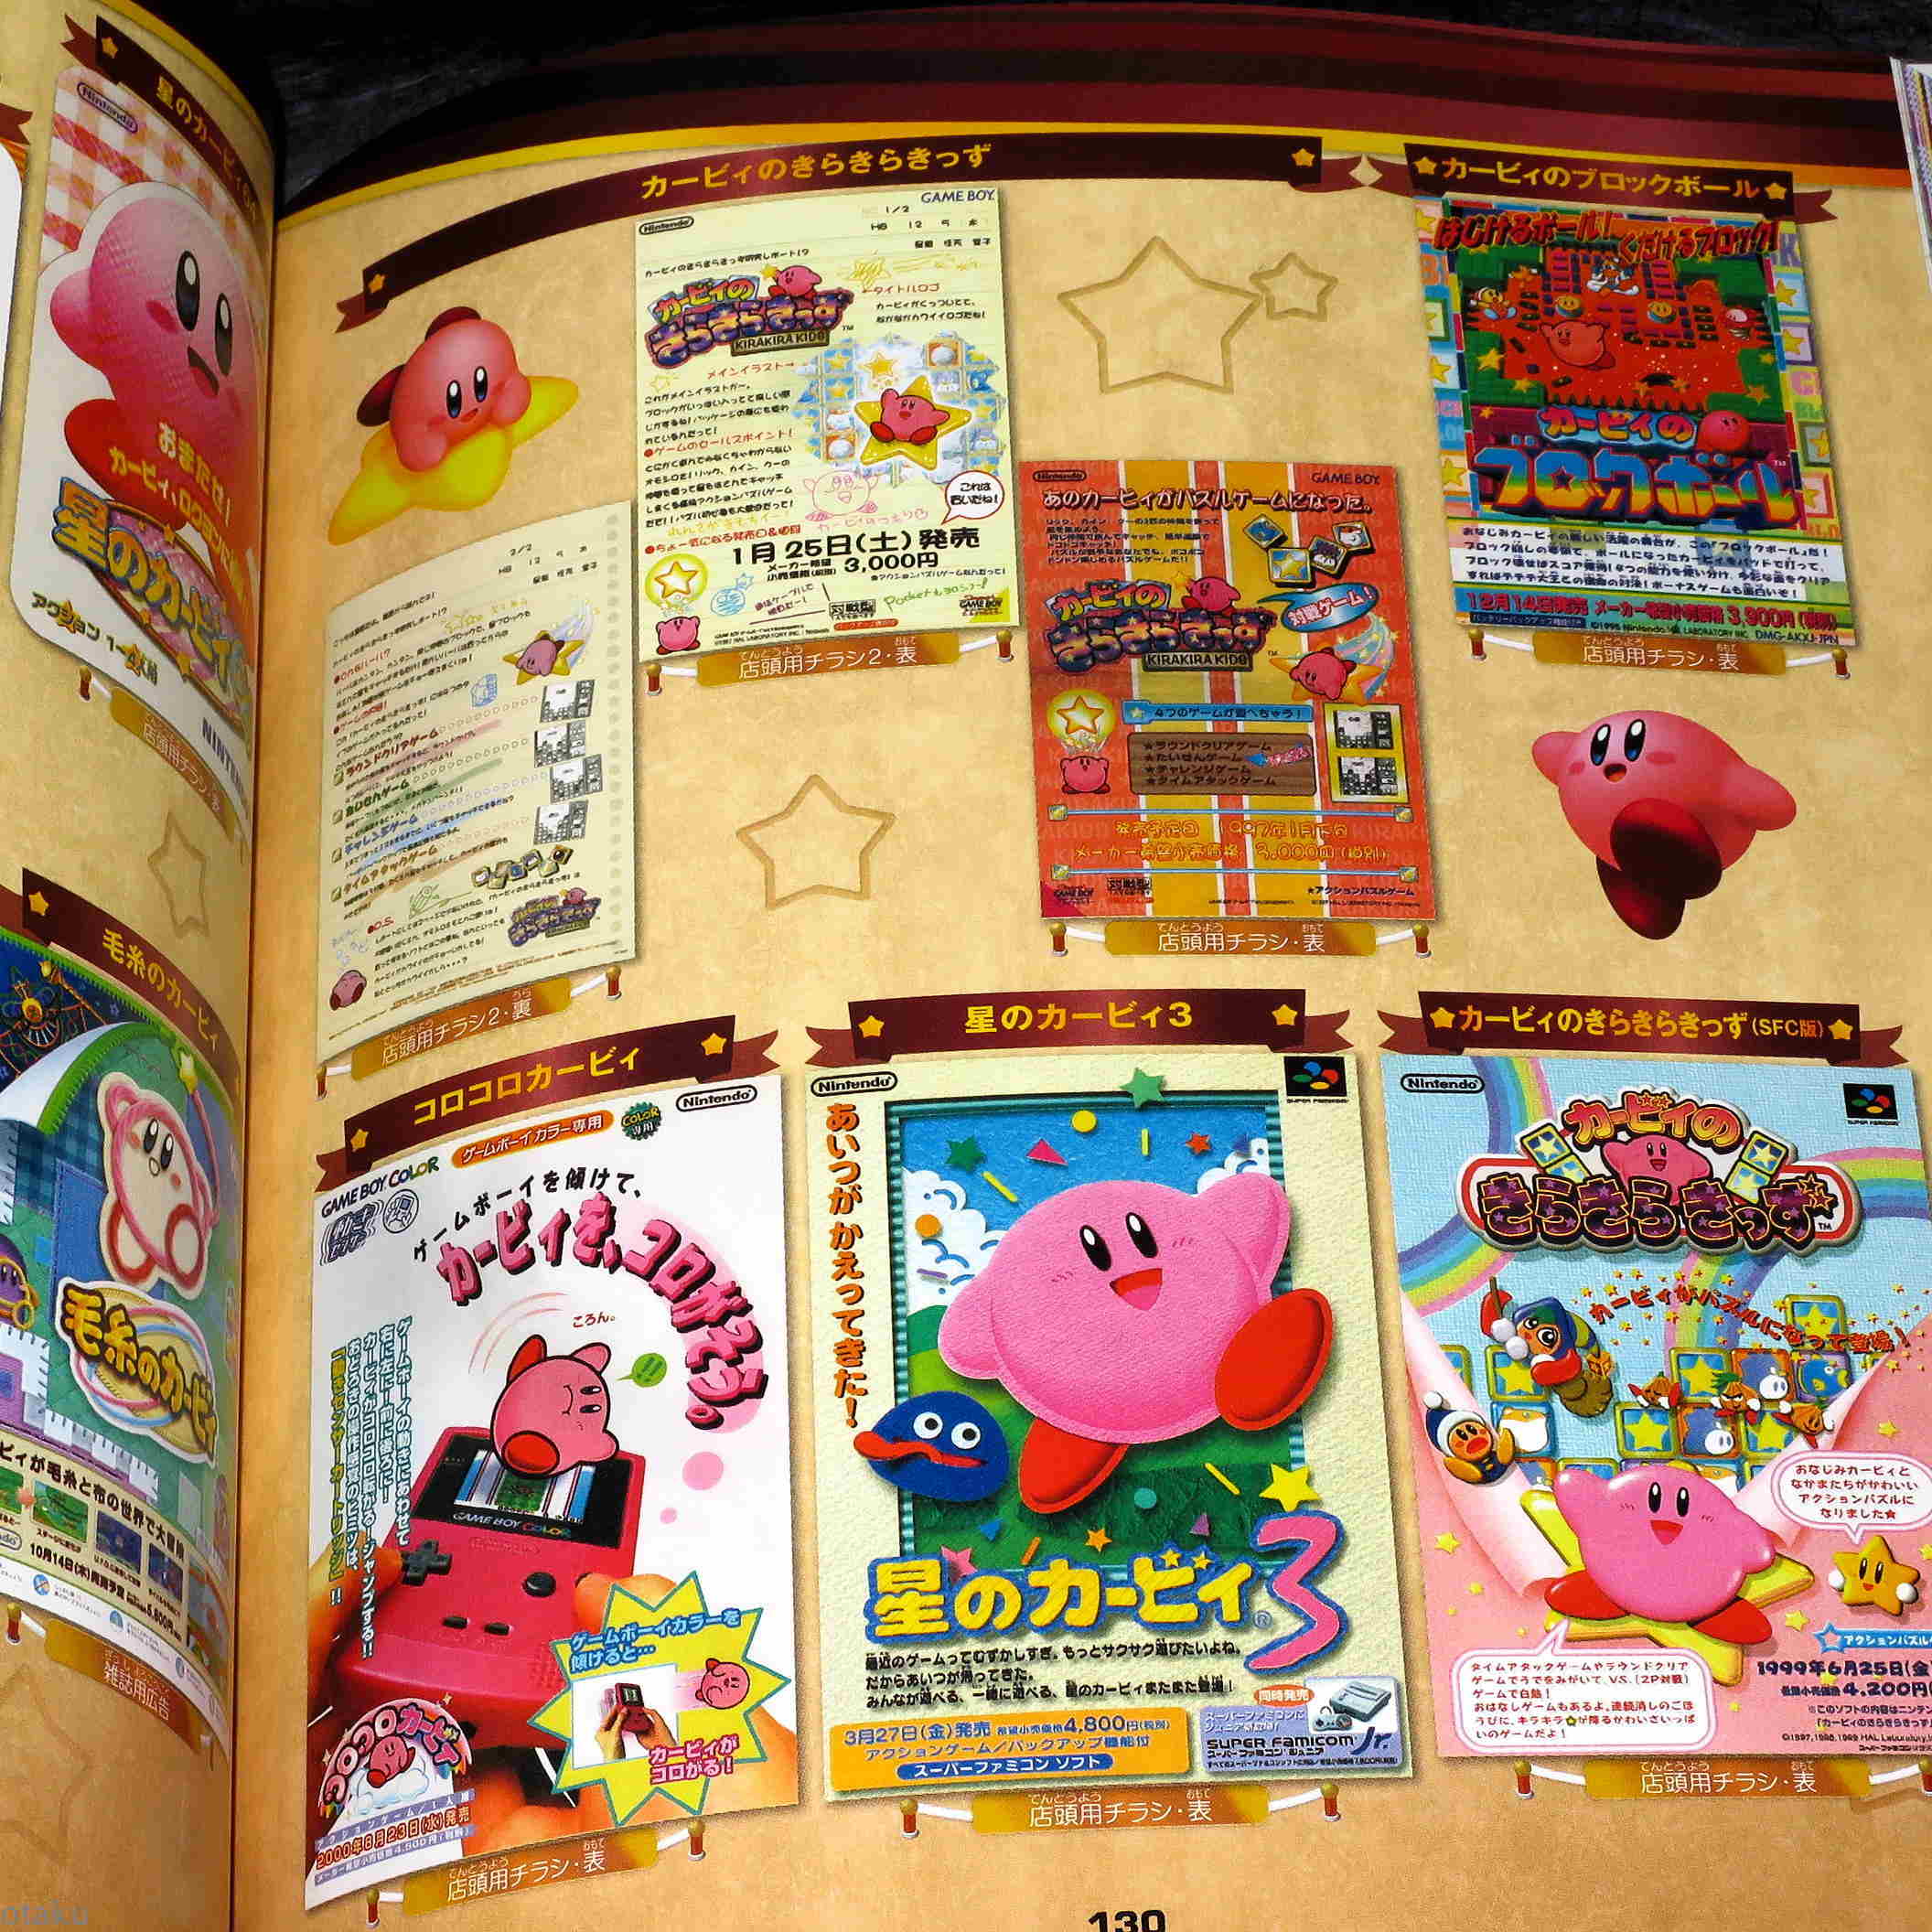 Hoshi No Kirby 20th Anniversary Edition - fasrrates